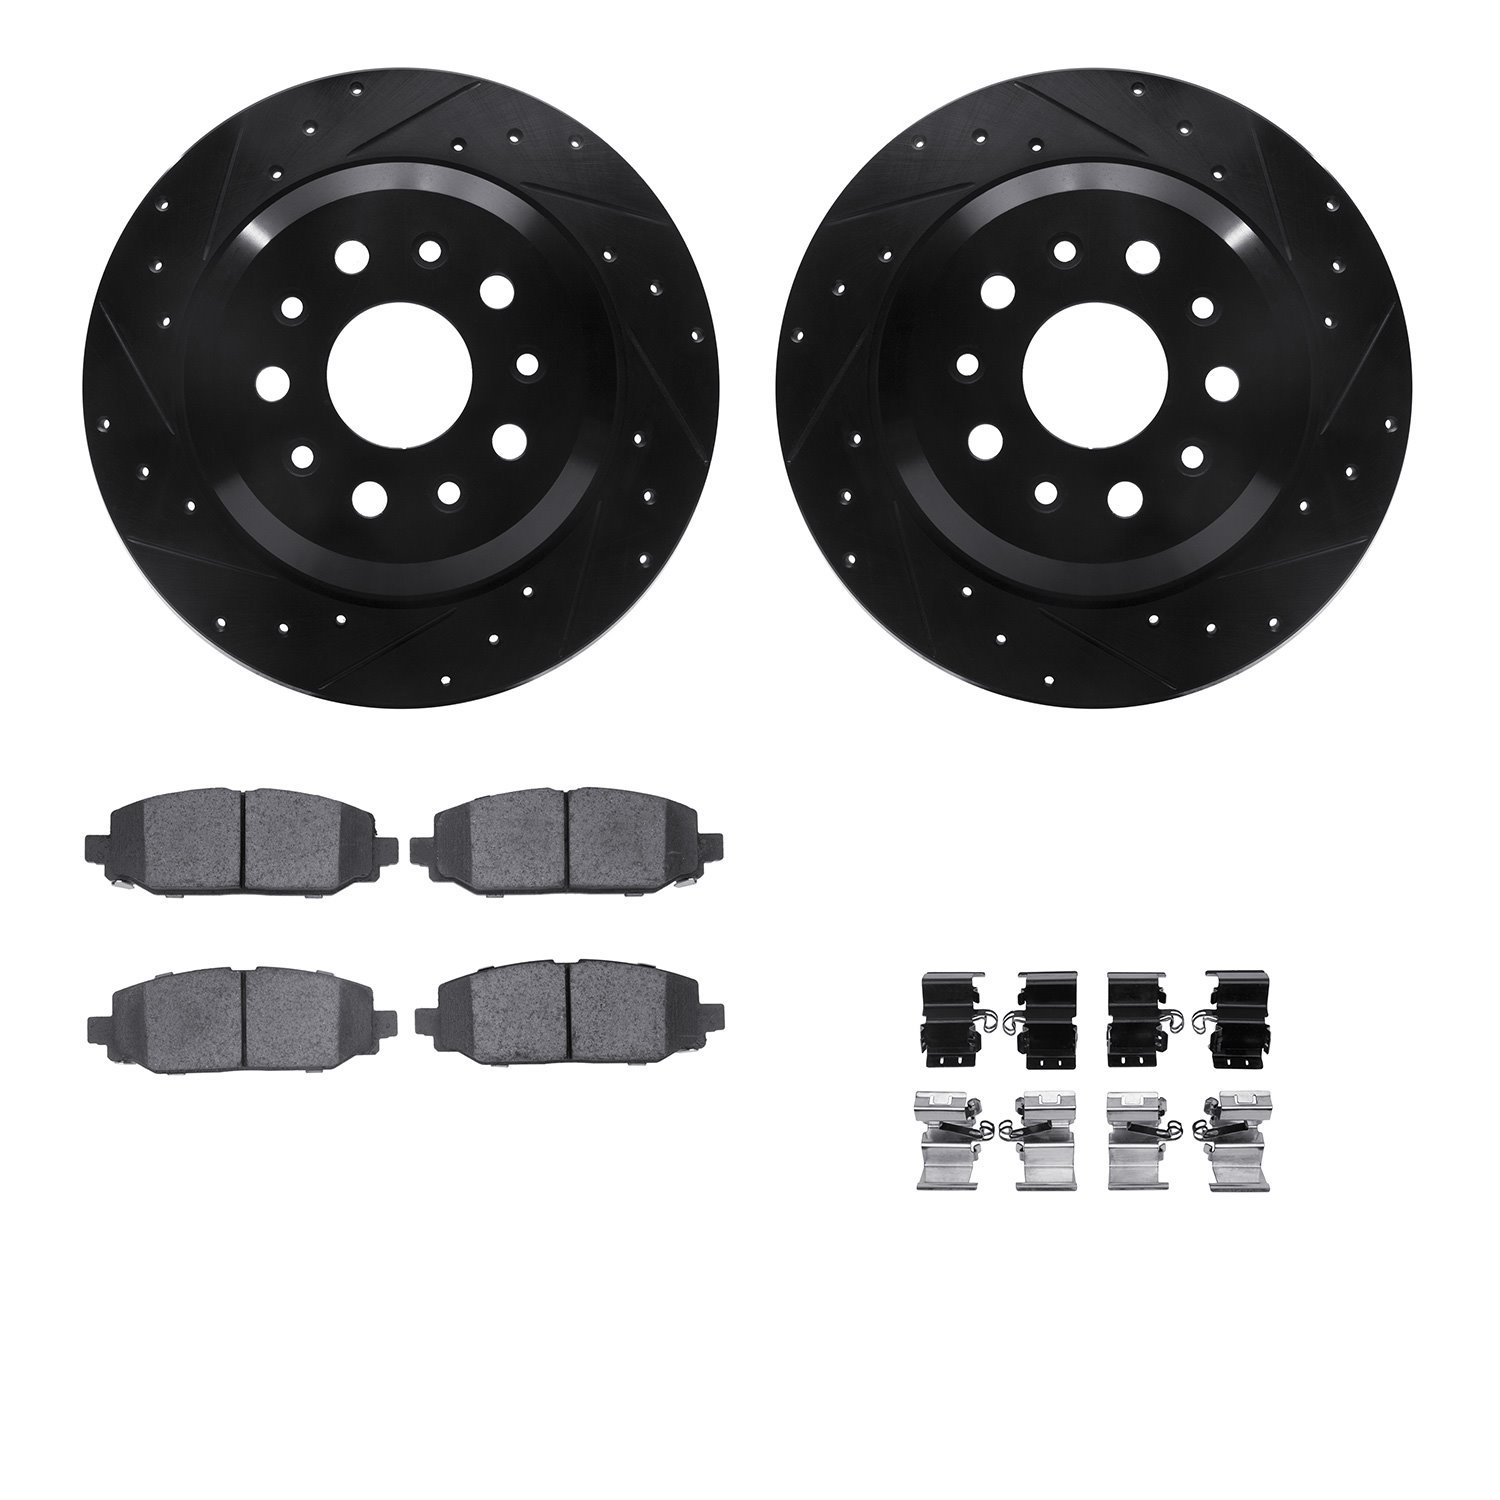 8412-42047 Drilled/Slotted Brake Rotors with Ultimate-Duty Brake Pads Kit & Hardware [Black], Fits Select Mopar, Position: Rear